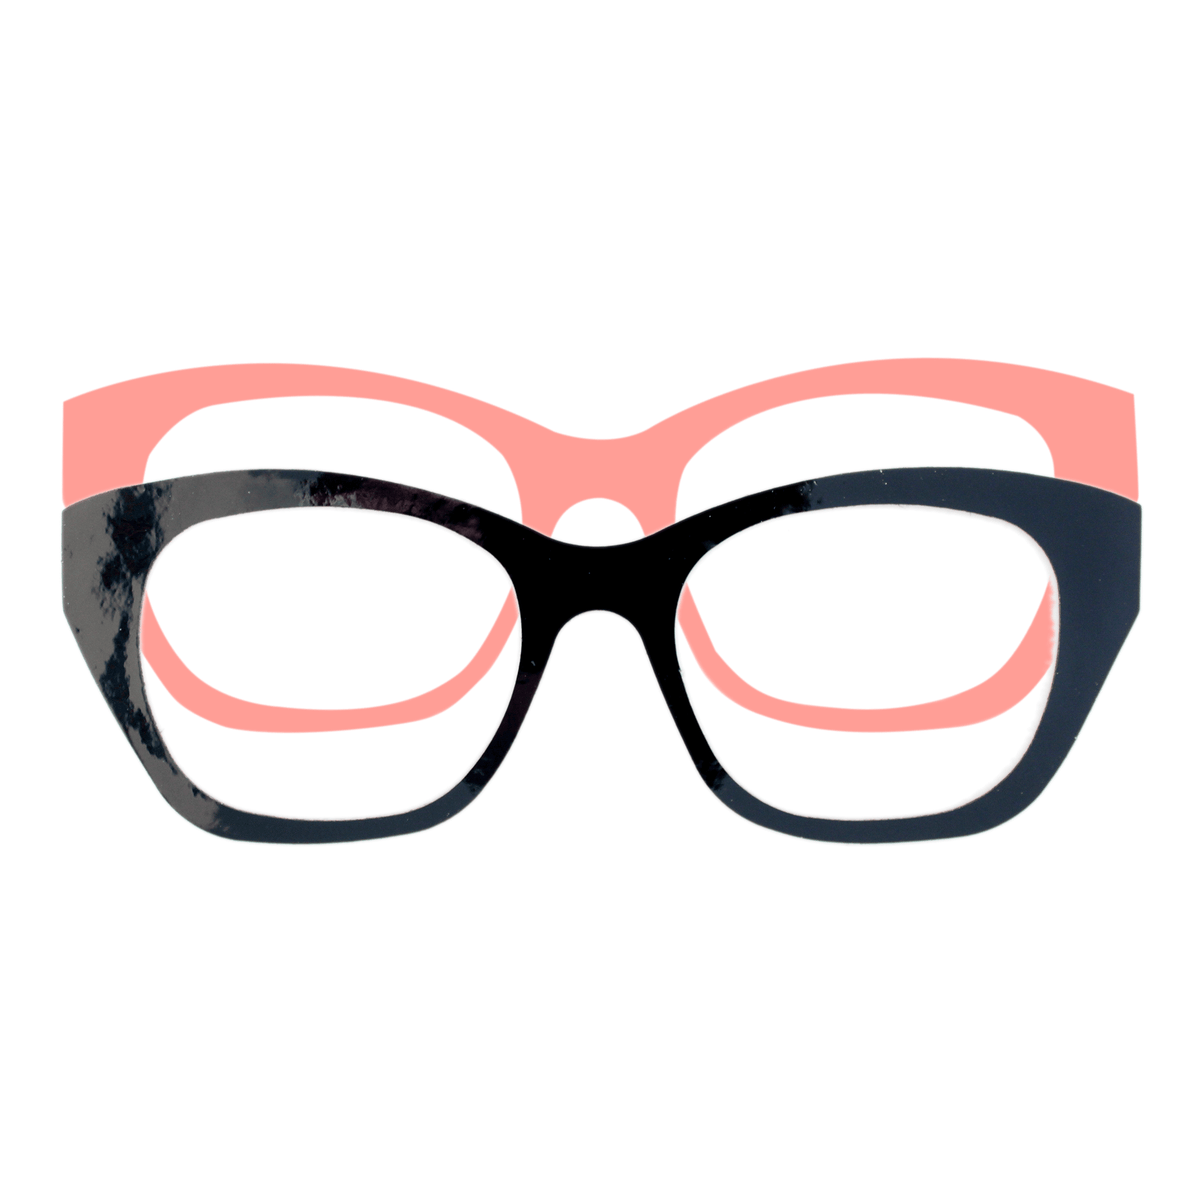 Weslyn Readers + Two Eyewear Stickers